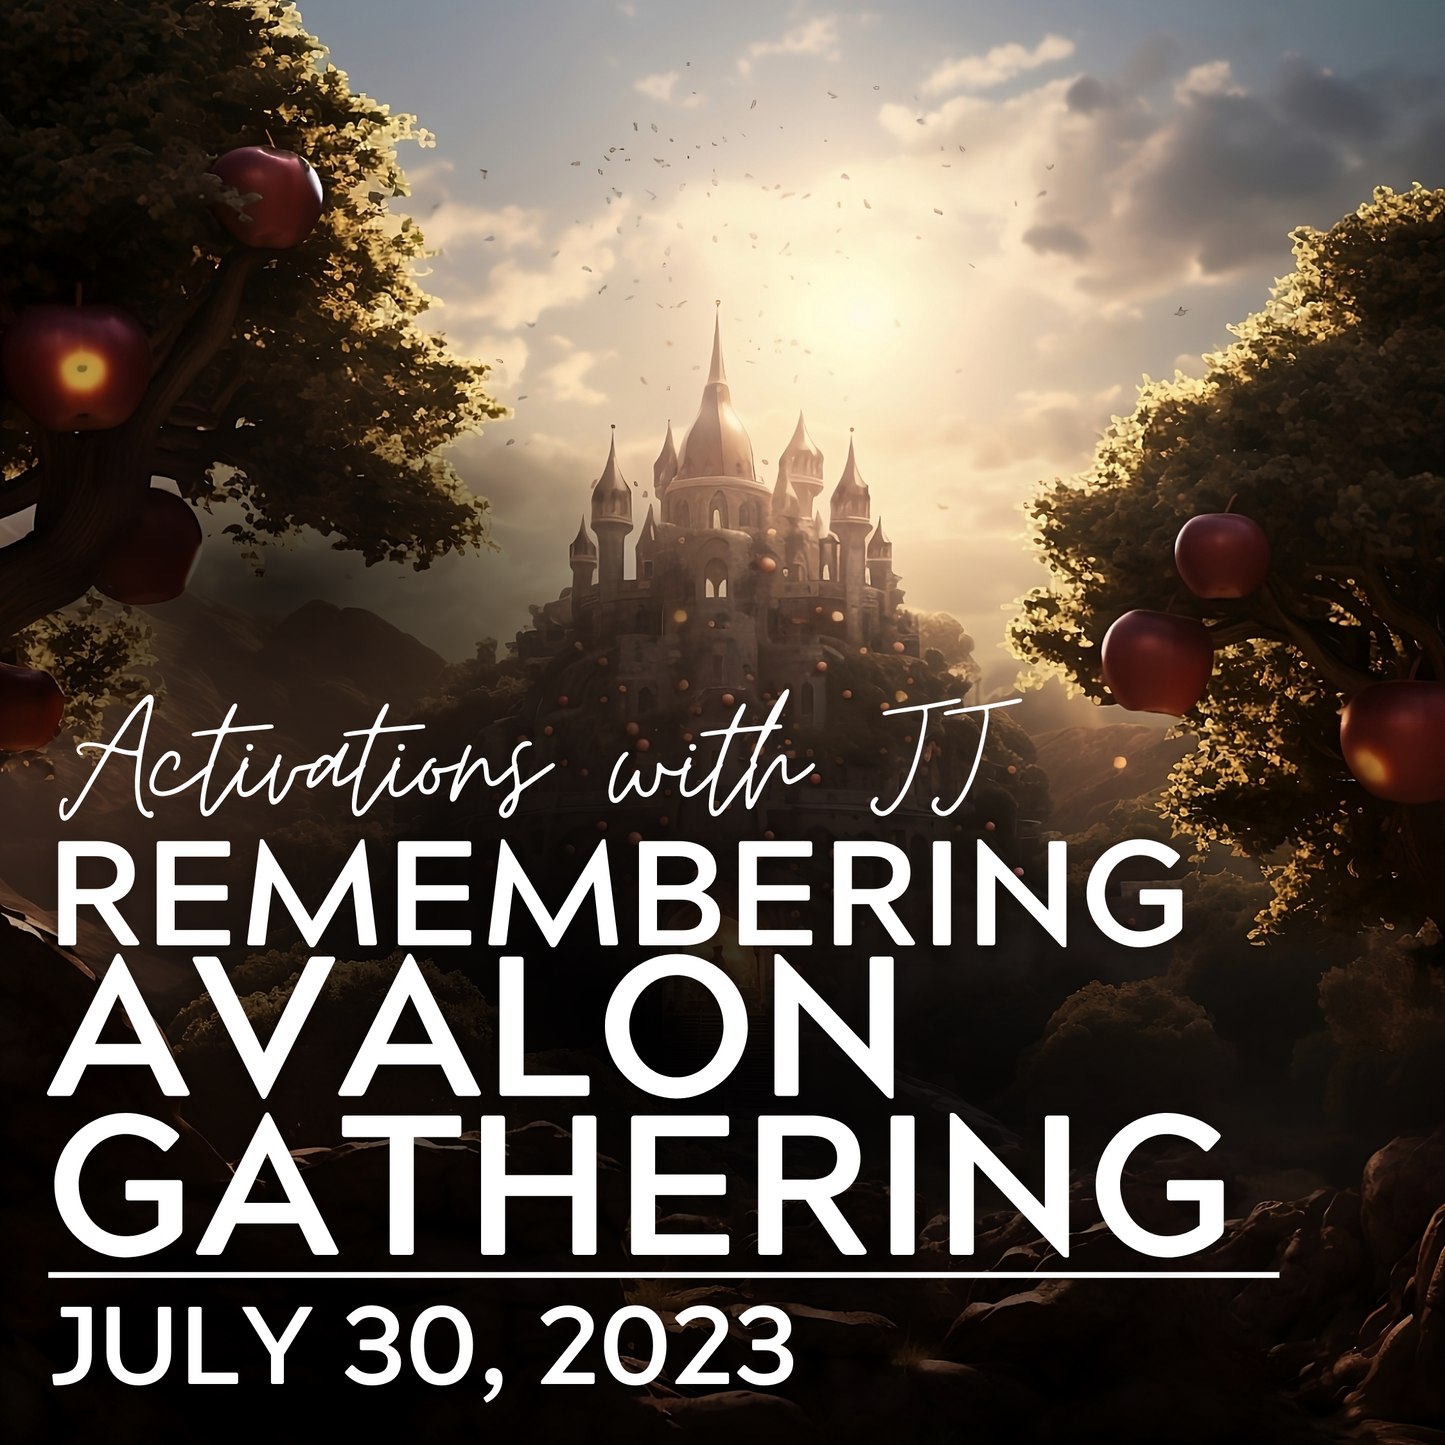 Remembering Avalon Gathering (MP3 Recording) | July 30, 2023